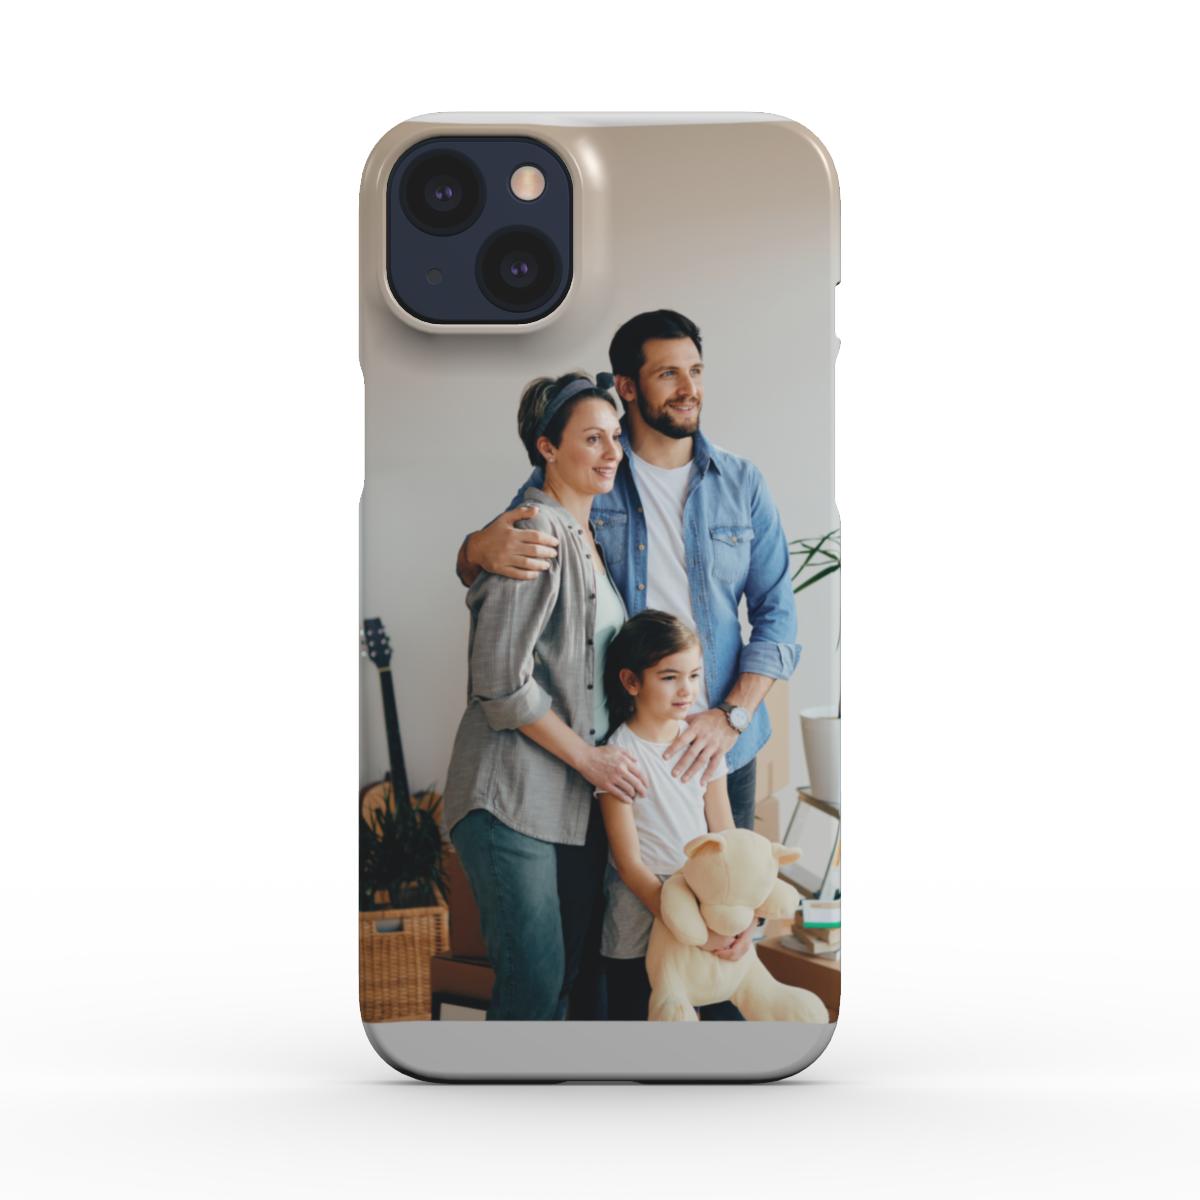 Print On Demand Snap Phone Case